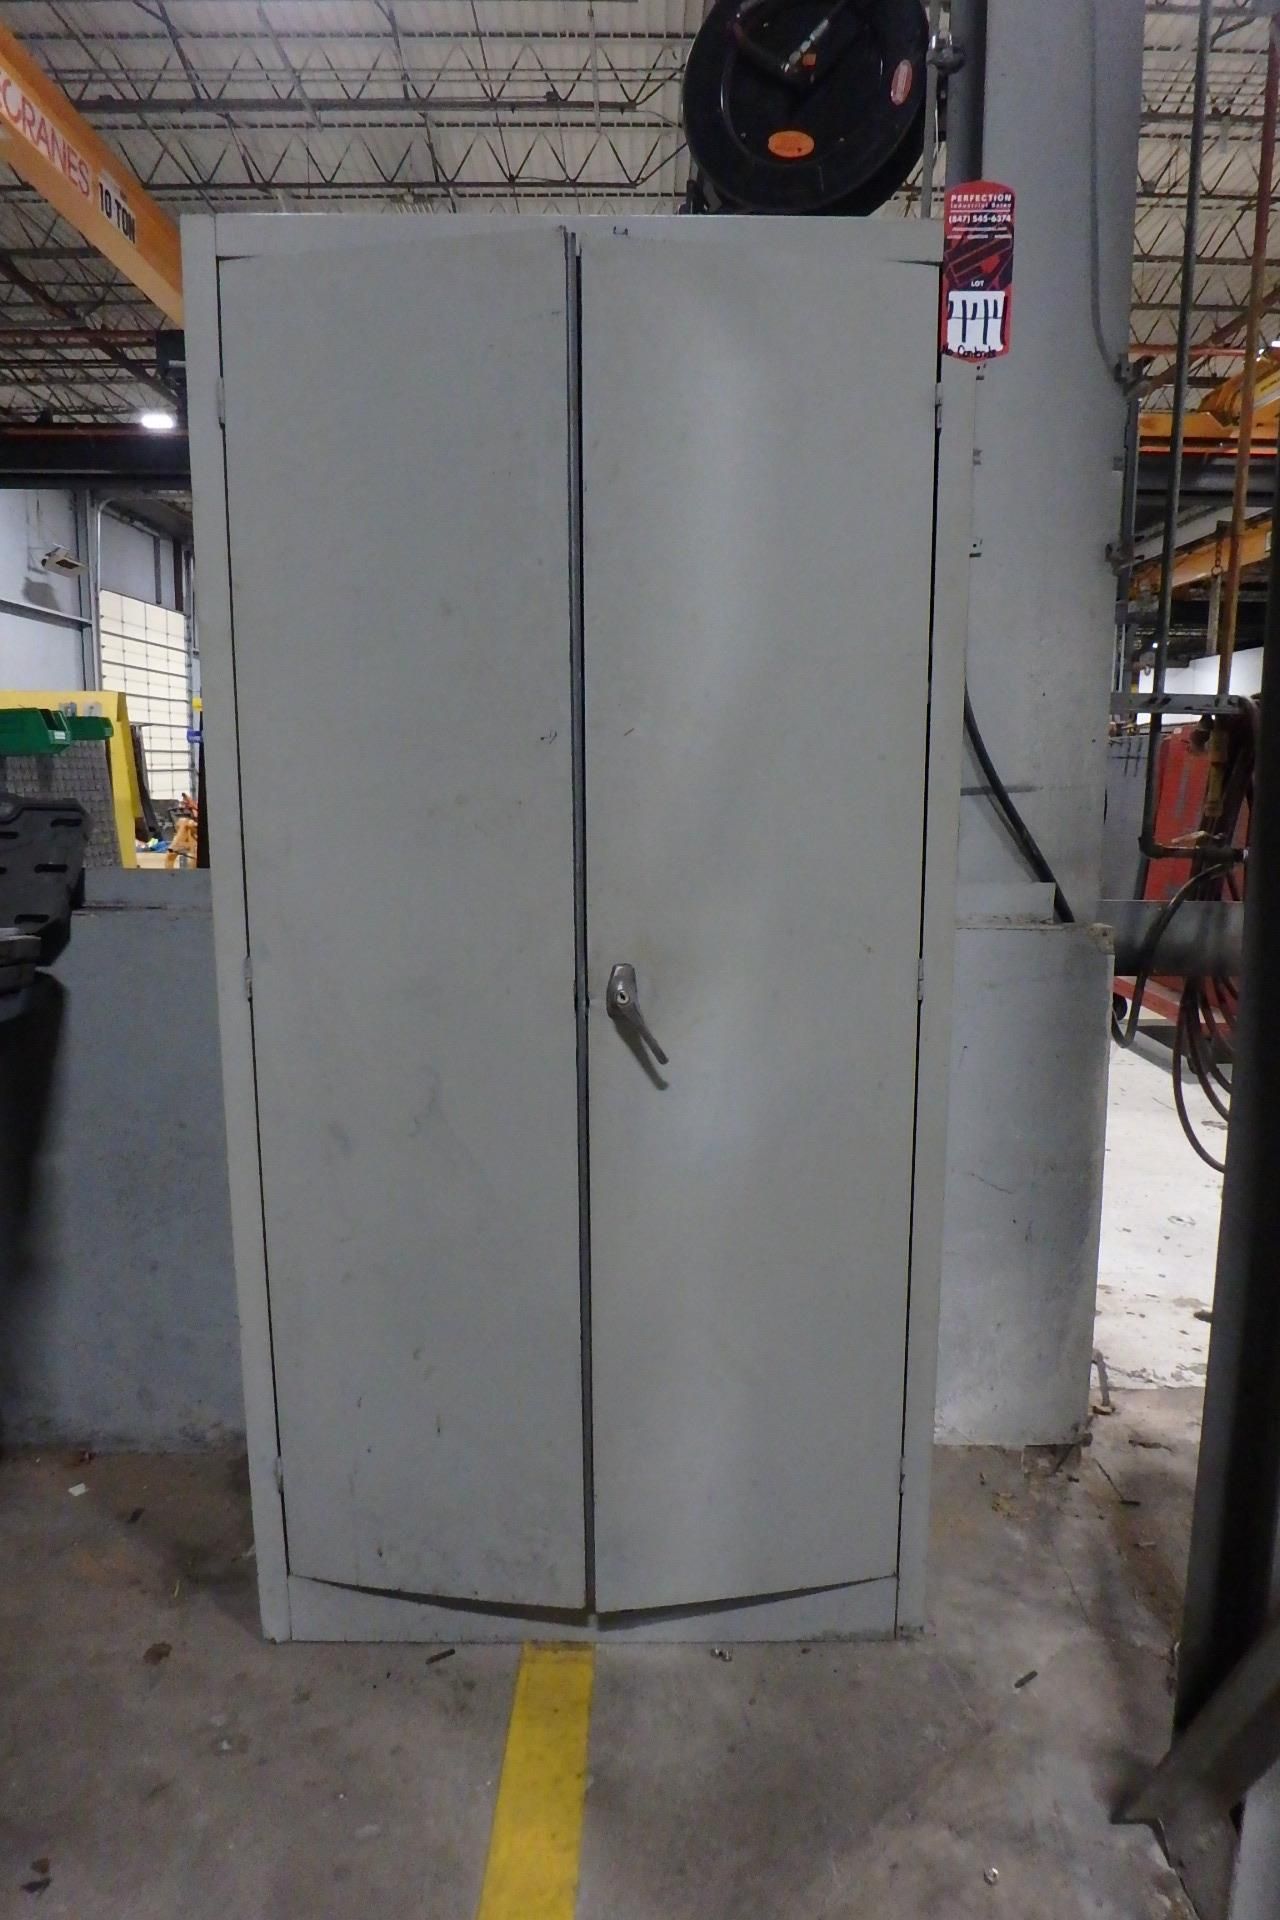 Lot Comprising (2) 2-Door Metal Storage Cabinets, (No Contents)